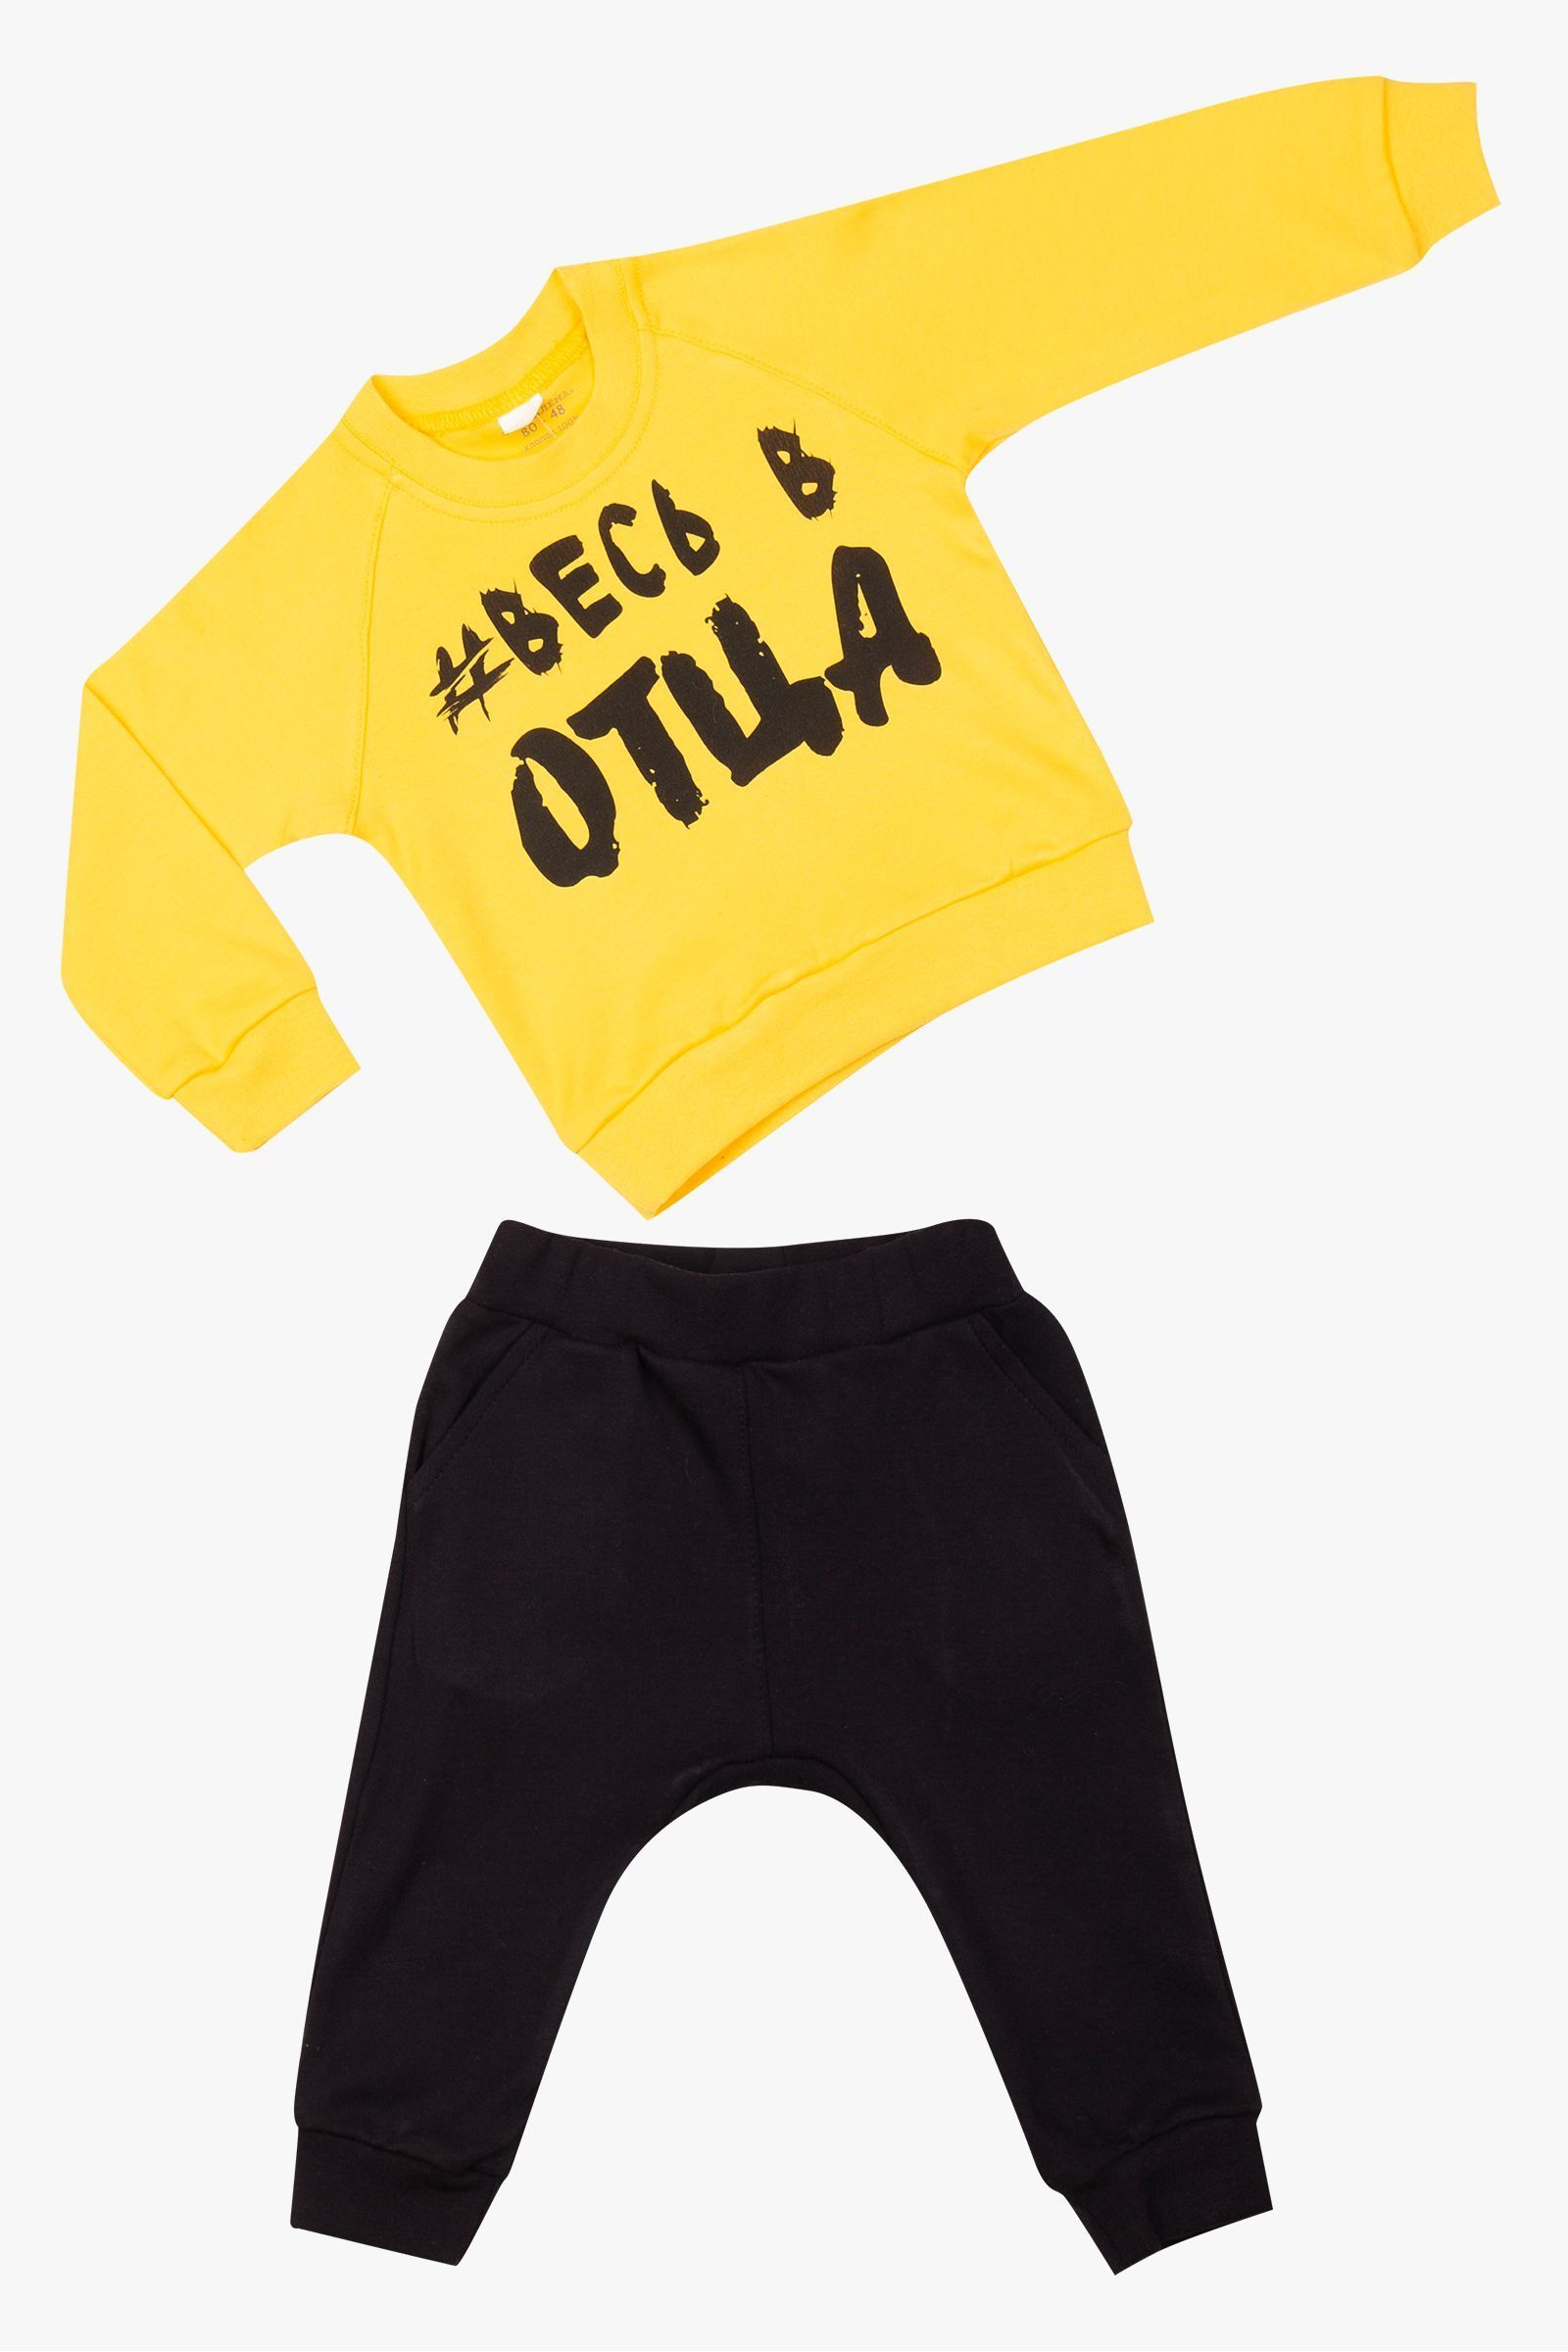 Комплект для мальчика АЛЕНА 4103 кофточка штанишки Текстиль Центр 